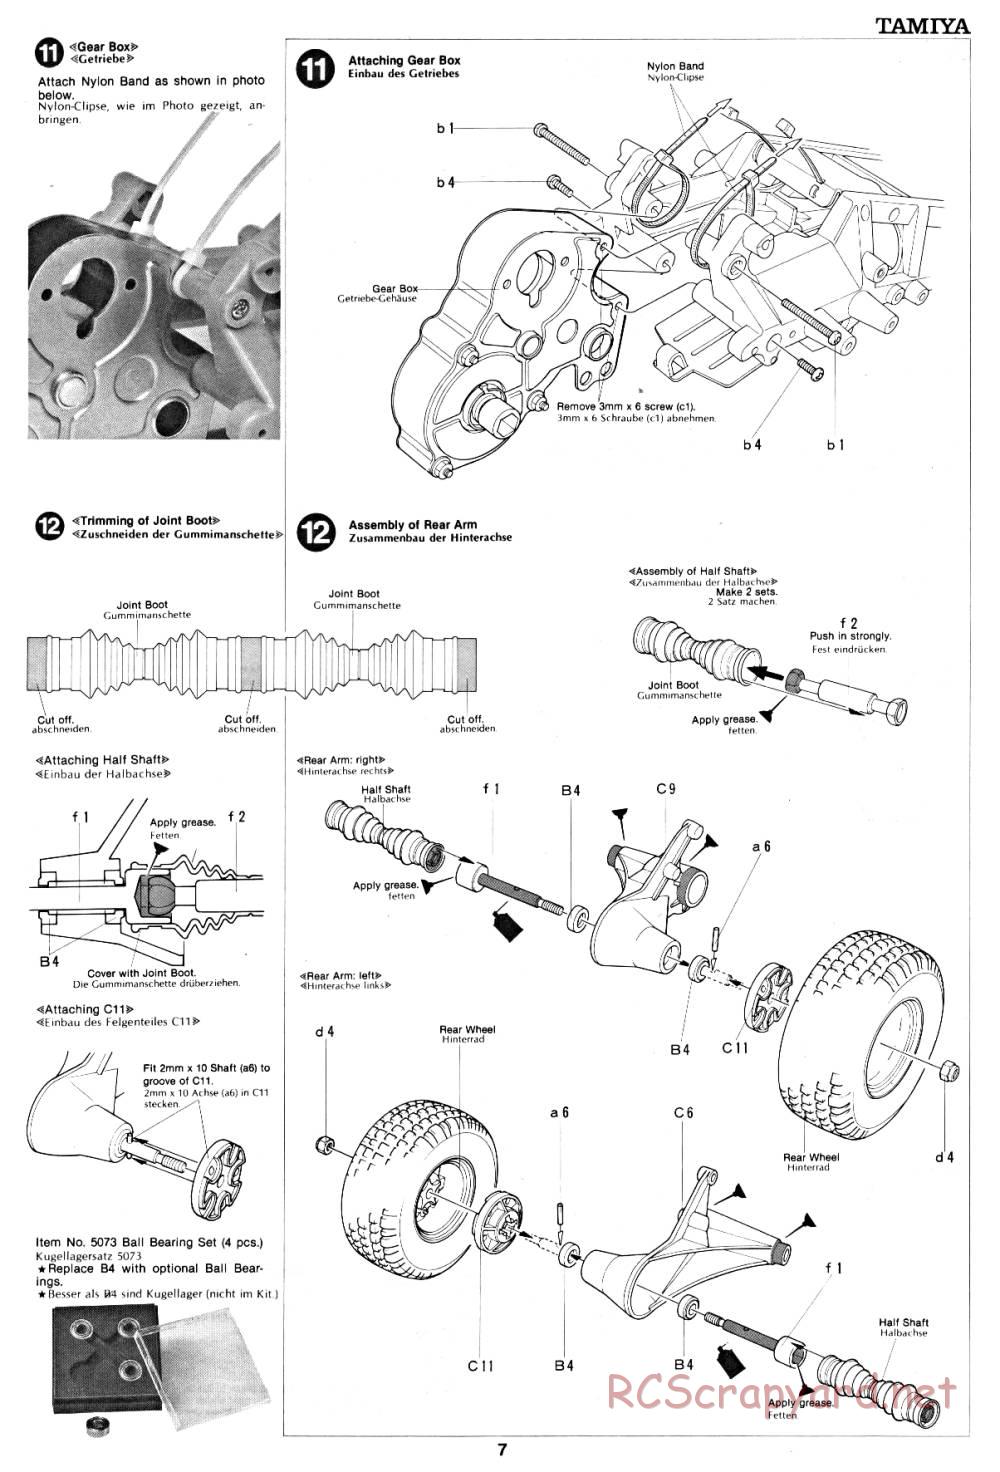 Tamiya - Subaru Brat - 58038 - Manual - Page 7